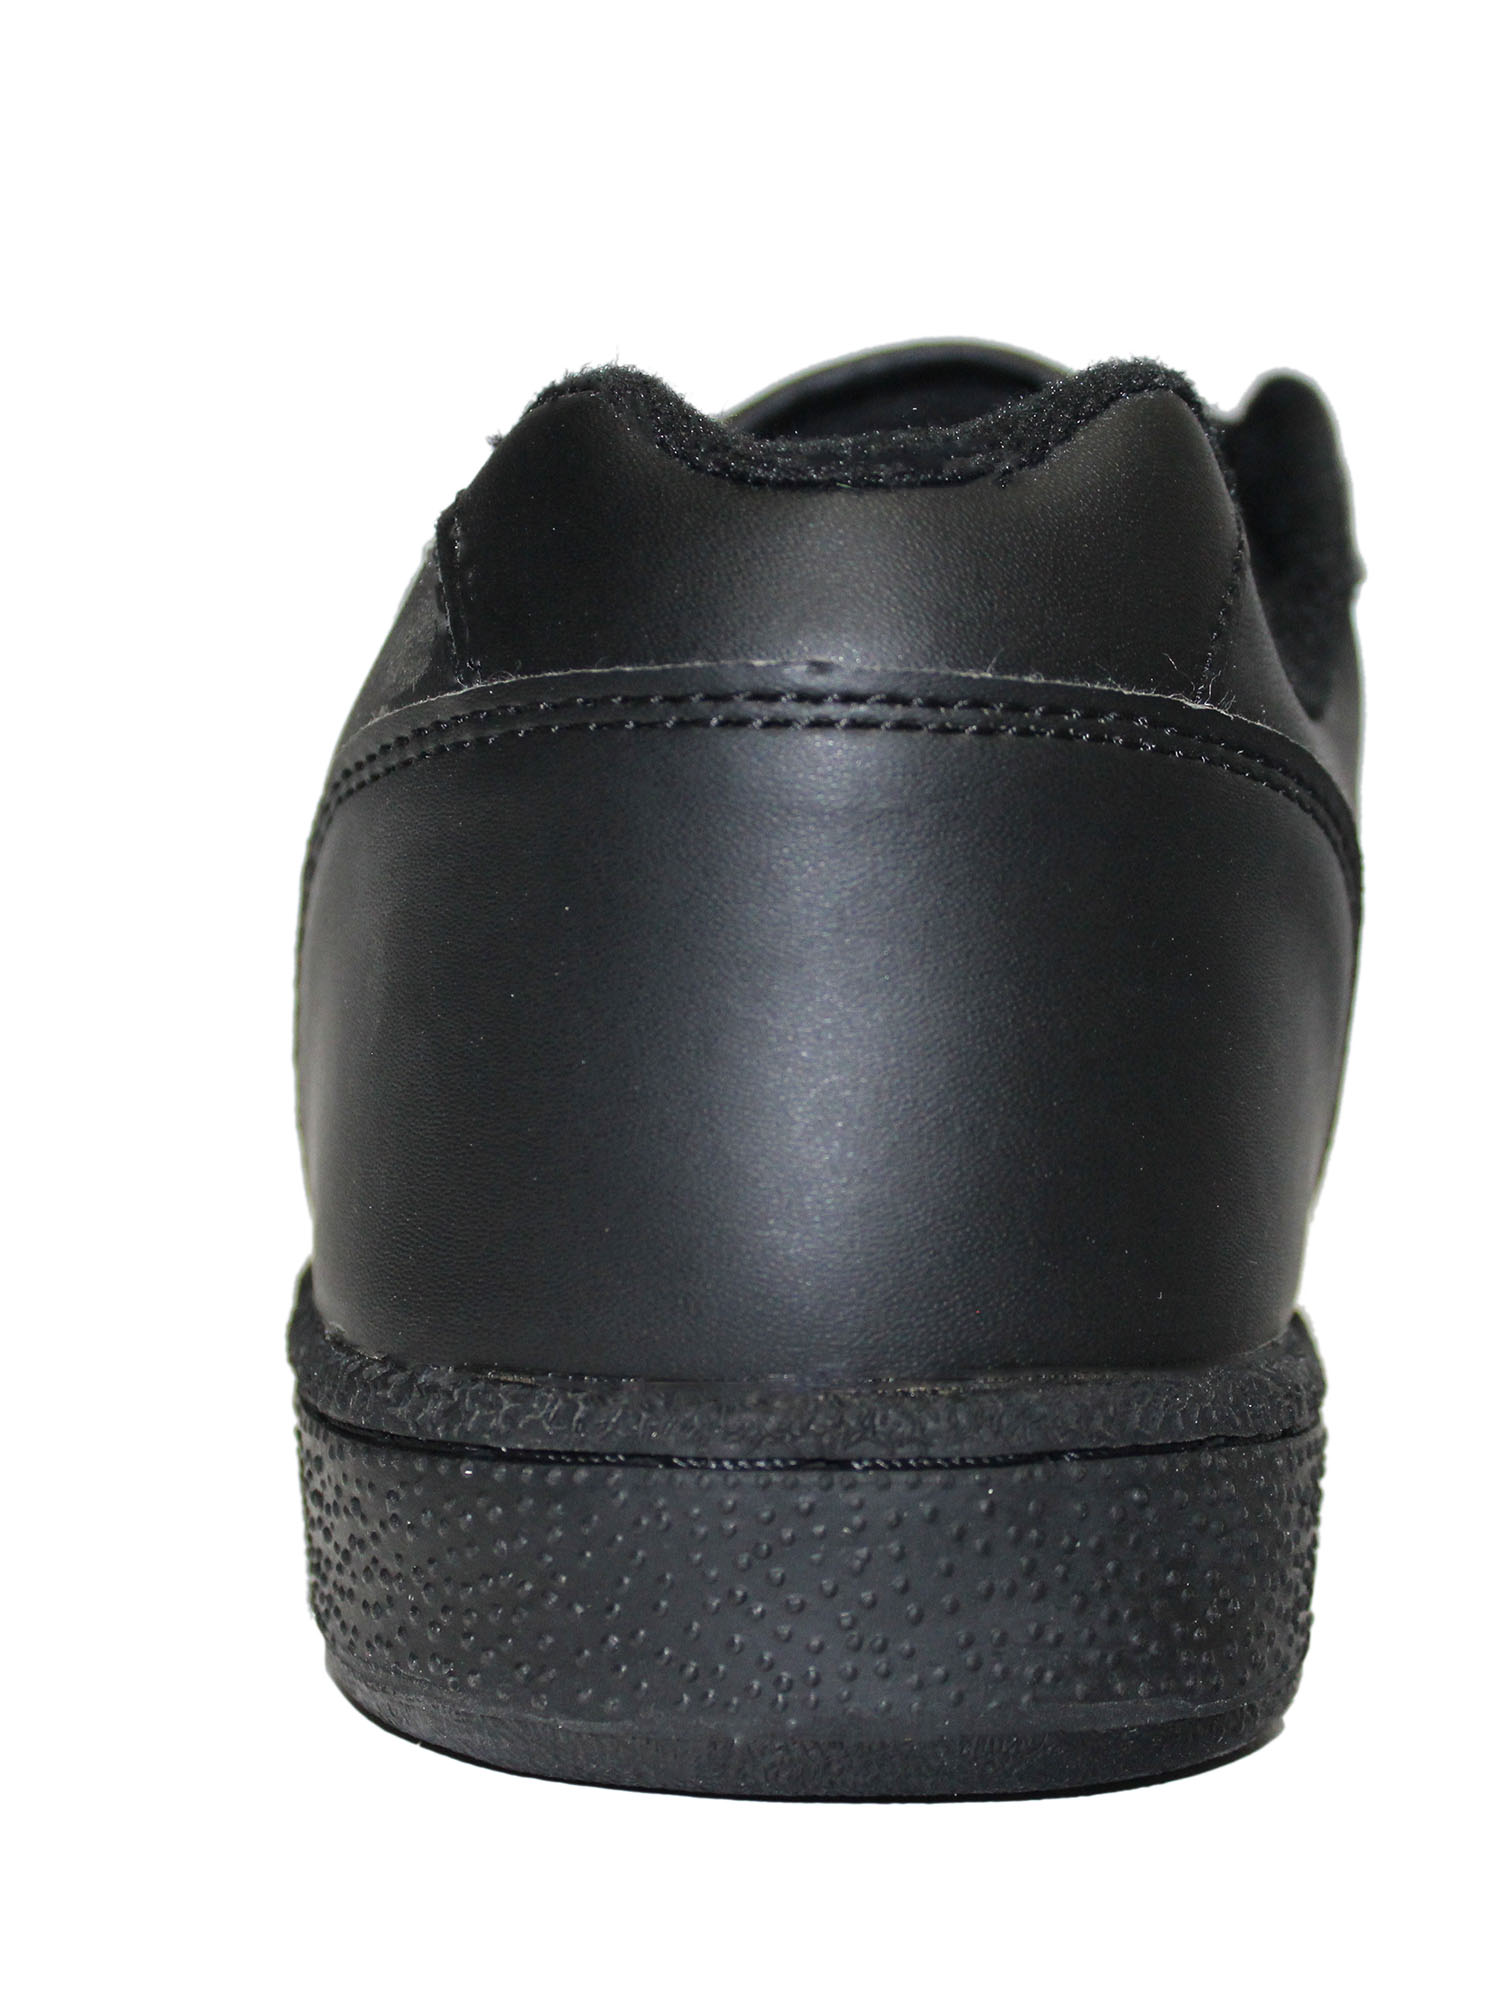 Tanleewa Men's Leather Strap Sneakers Lightweight Hook and Loop Walking Shoe Size 11.5 Adult Male - image 4 of 4